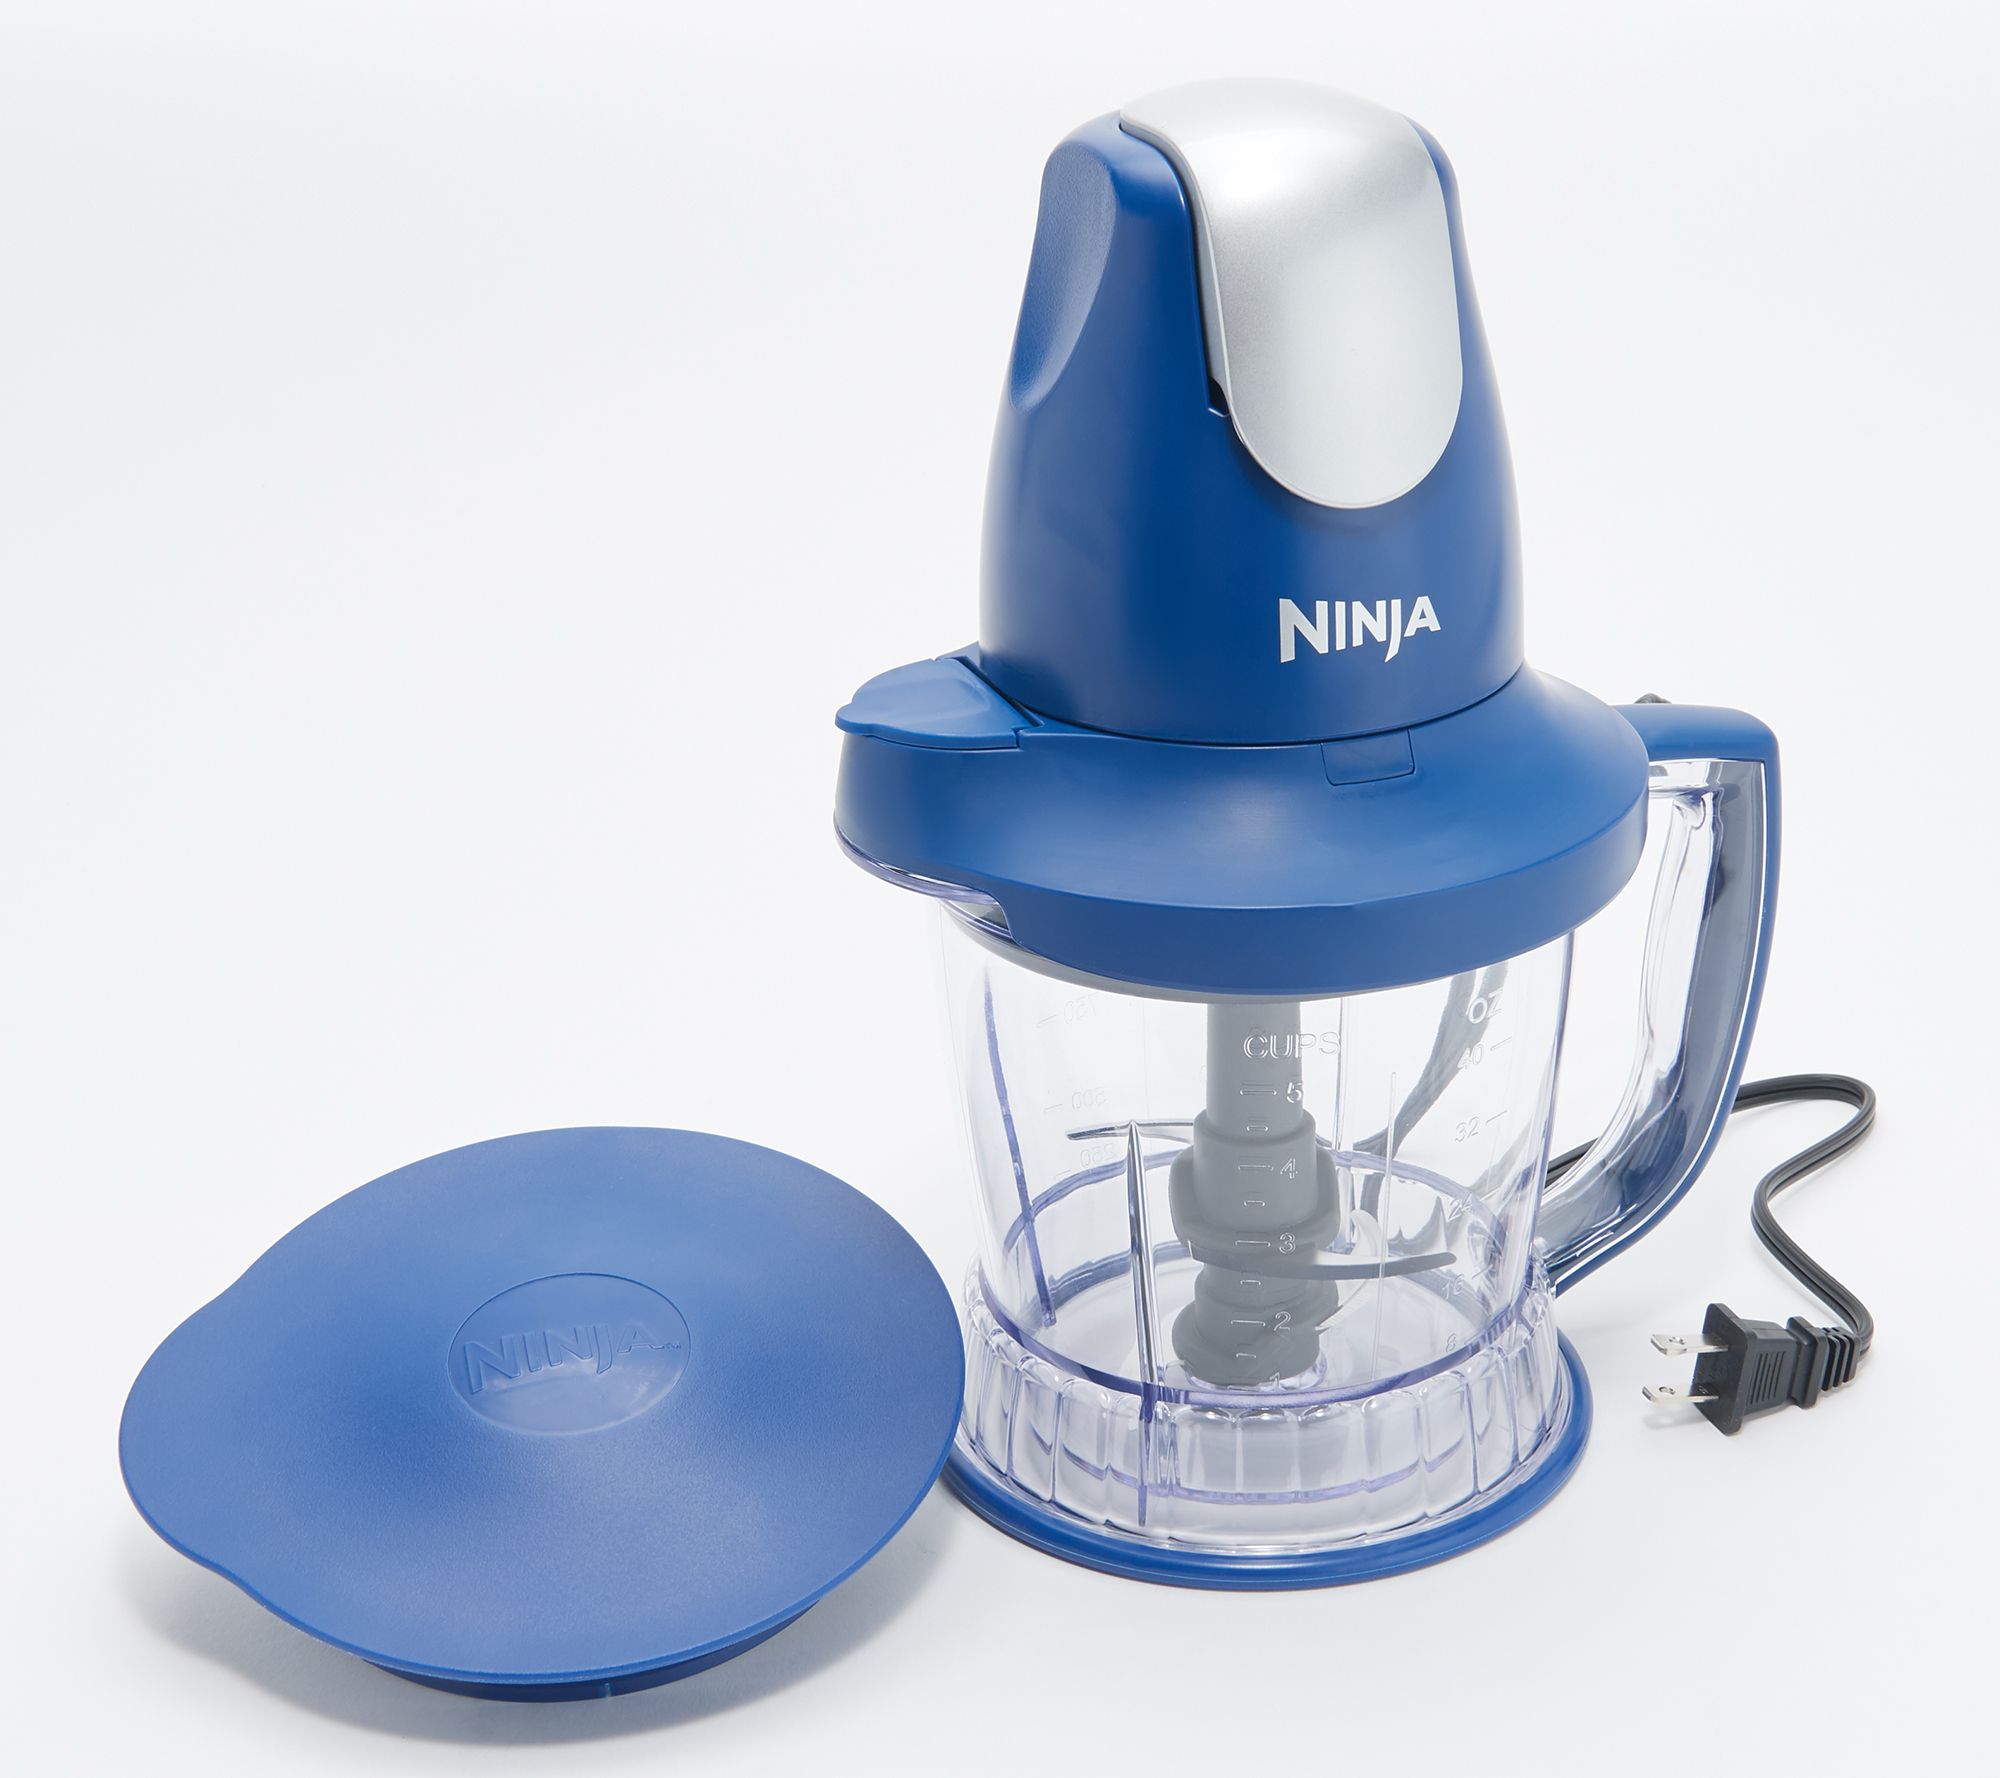 Ninja Storm 450-Watt 40 oz. Food and Drink Maker with Recipes